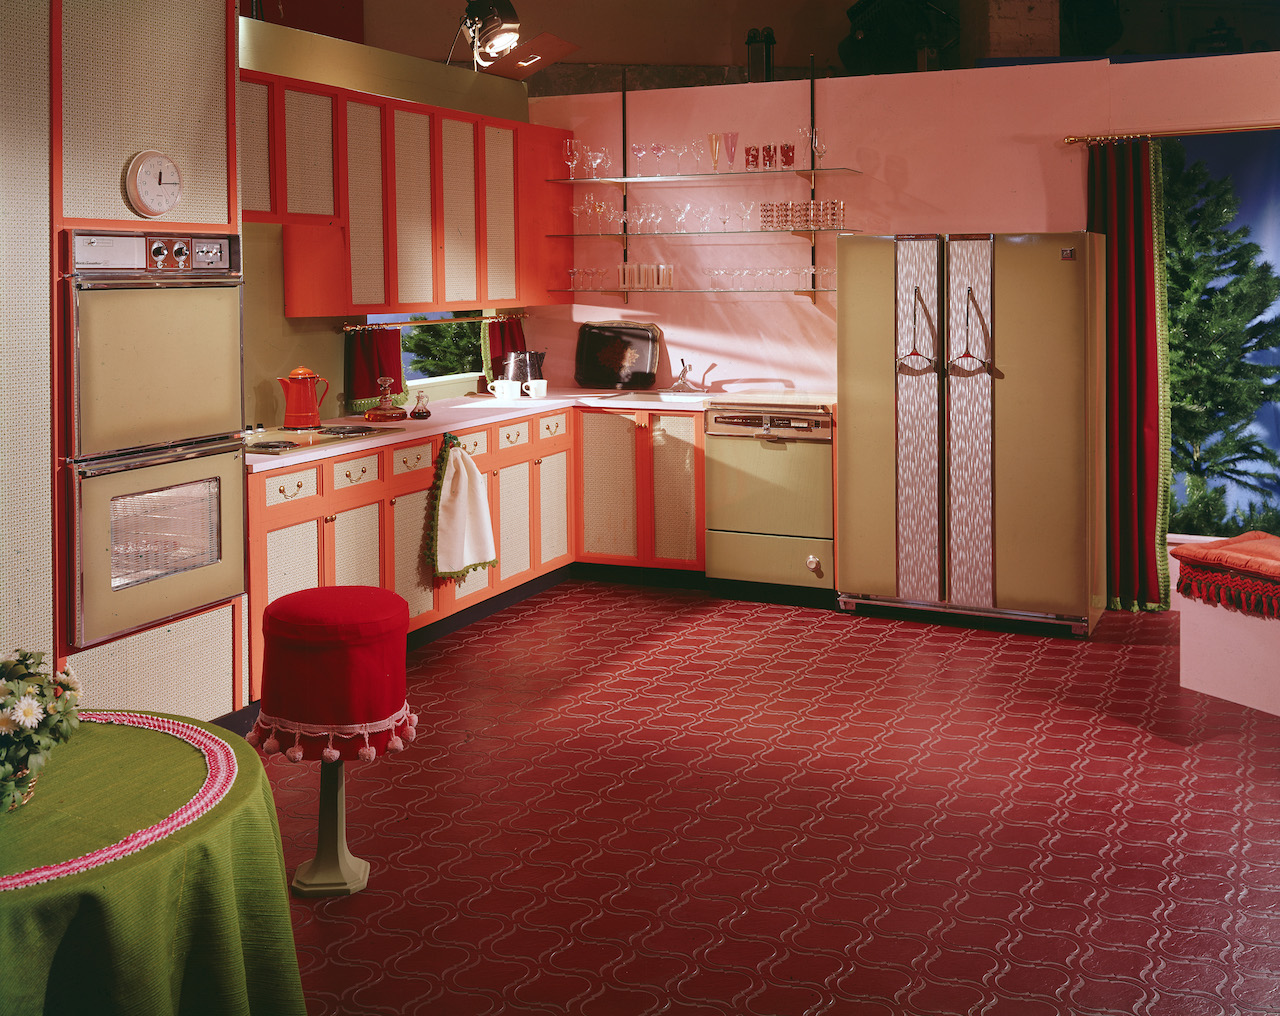 Colourful 1960s kitchen